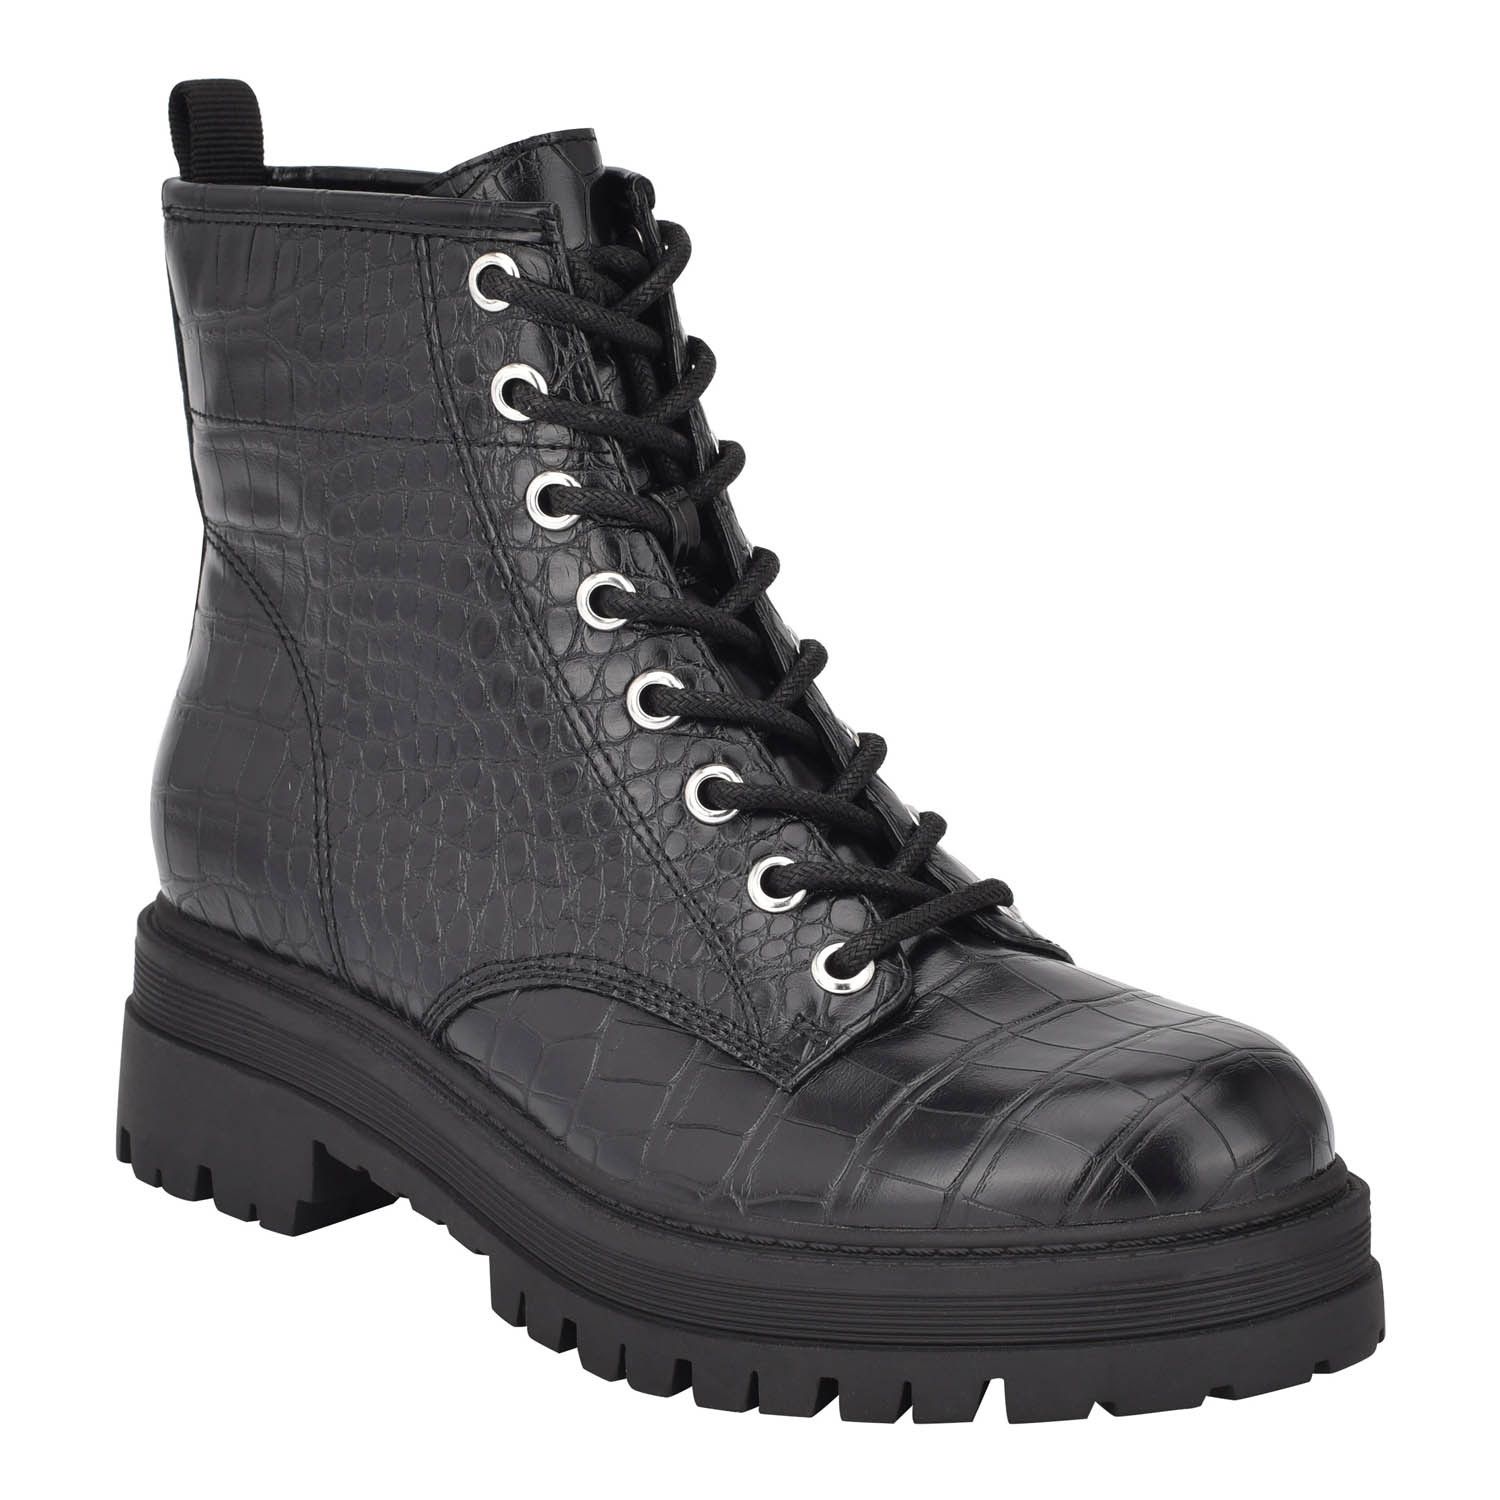 kohls black combat boots